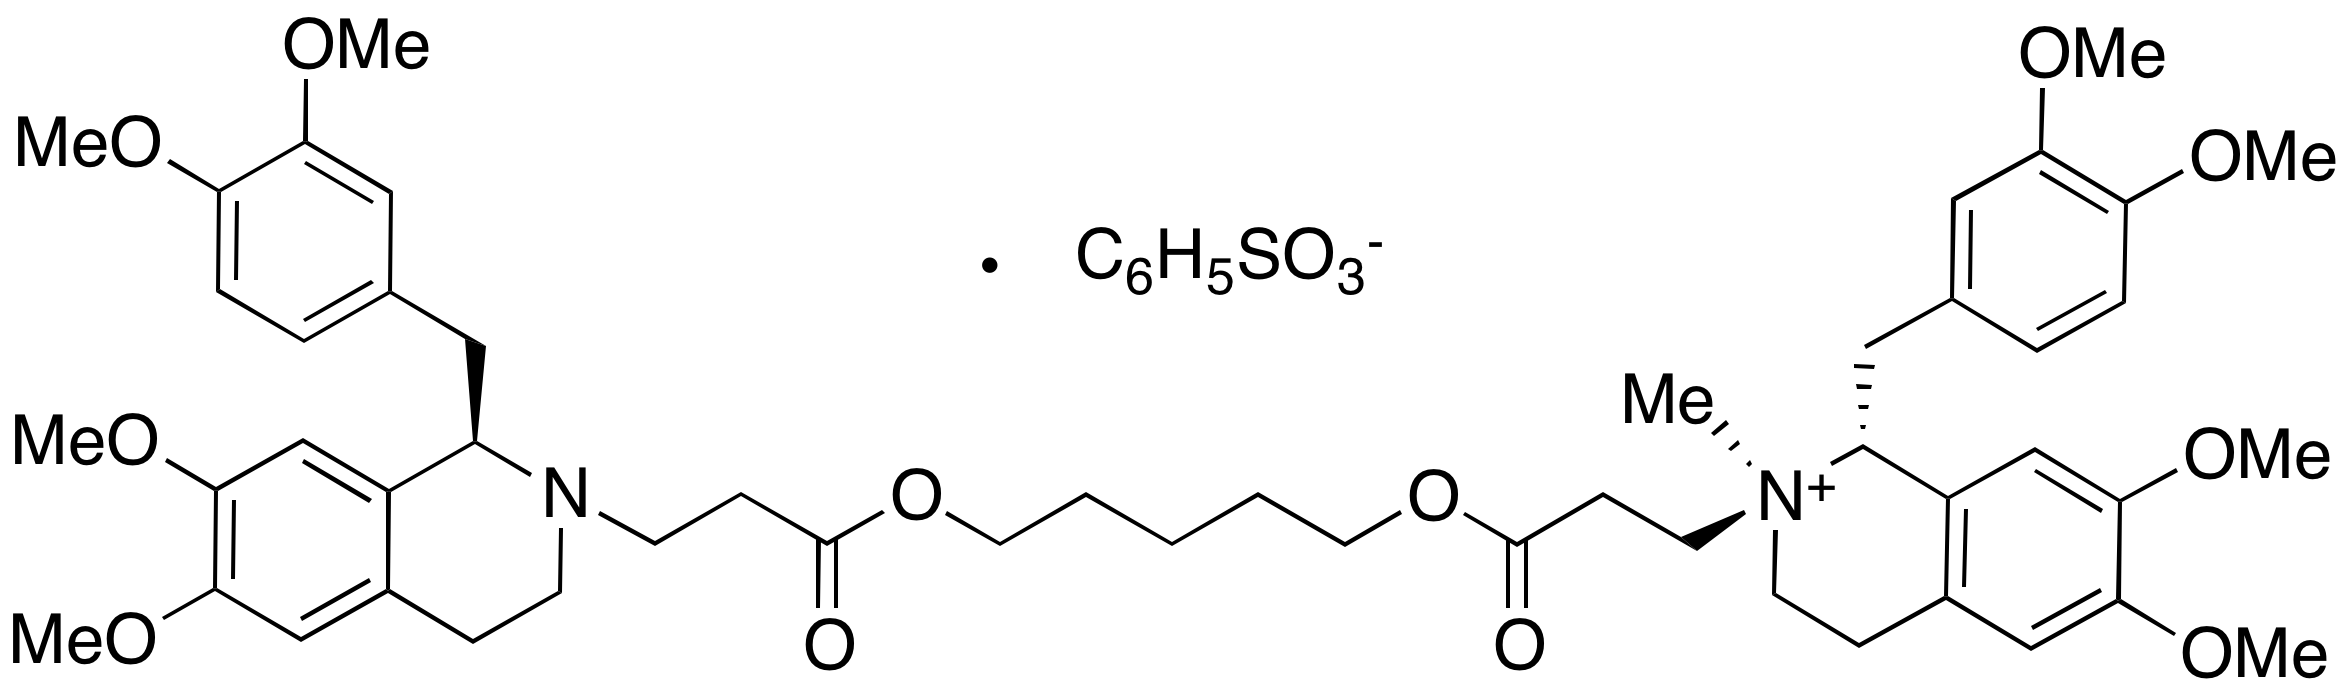 (1R,1’R, 2’S)-2-Desmethyl Cisatracurium Besylate